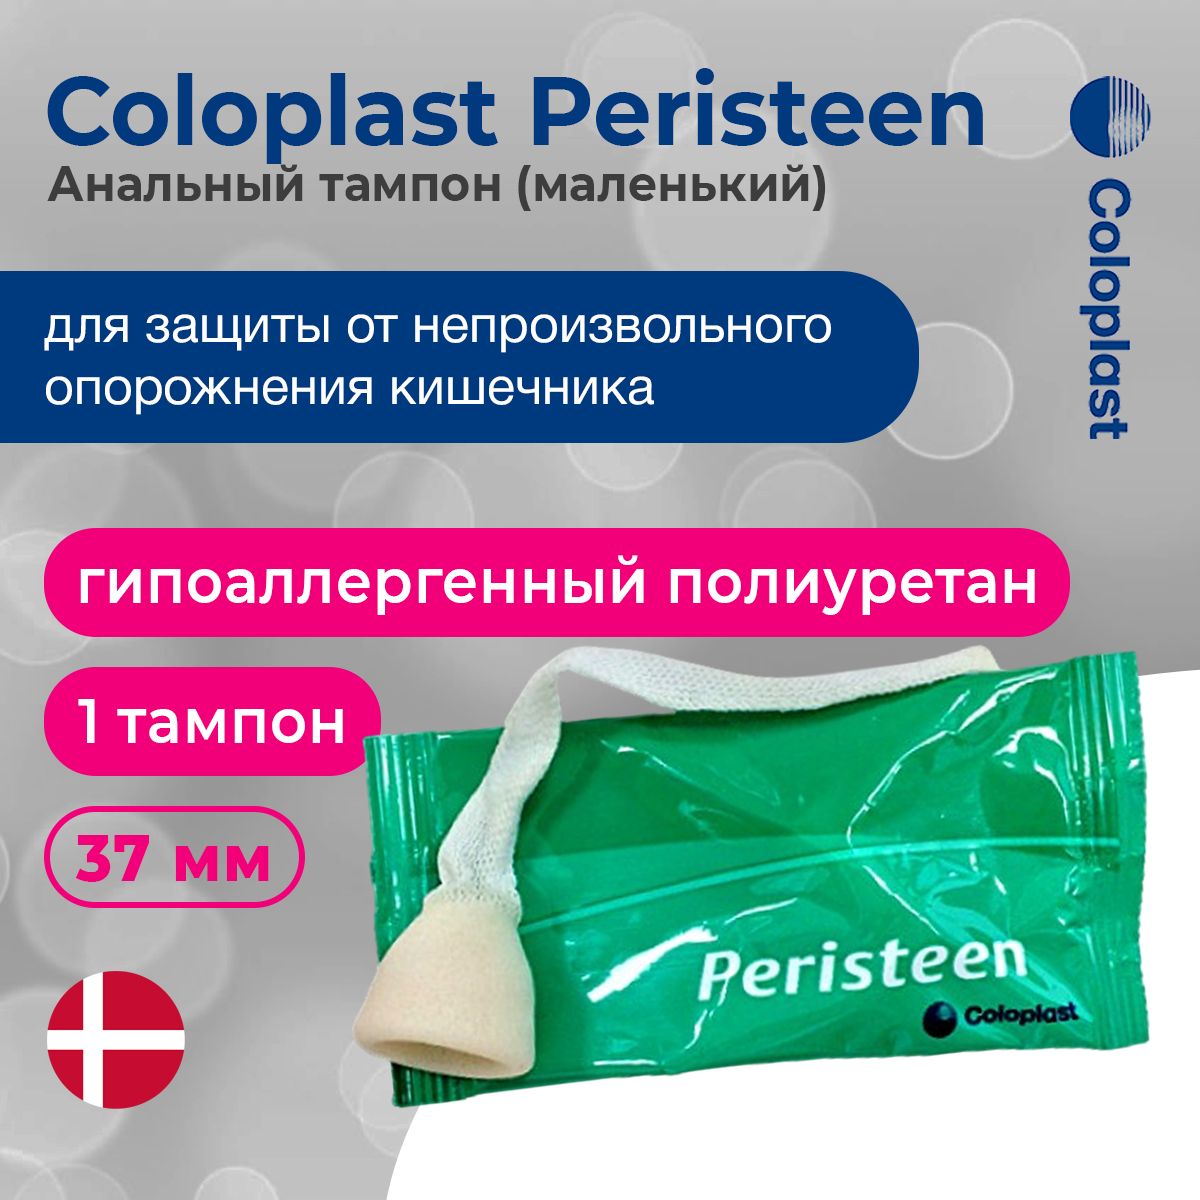 Coloplast Peristeen - анальный тампон (большой), 45мм